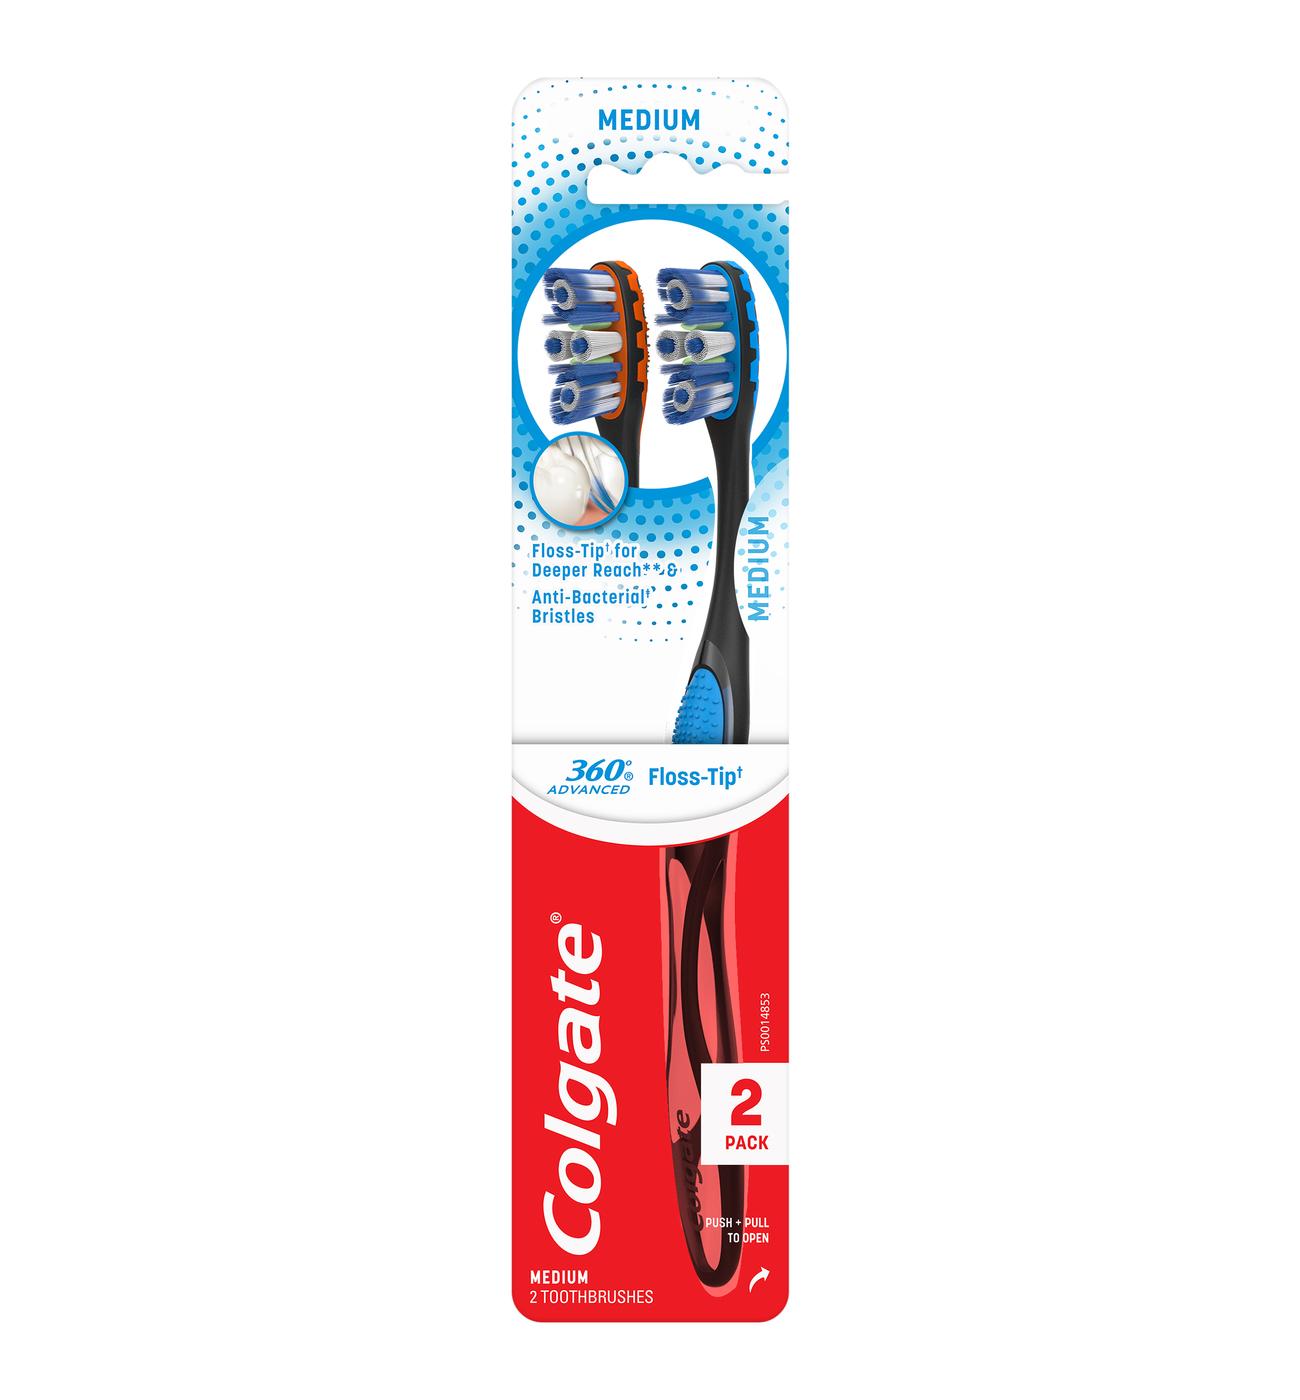 Colgate 360° Advanced Floss-Tip Toothbrush - Medium; image 1 of 5